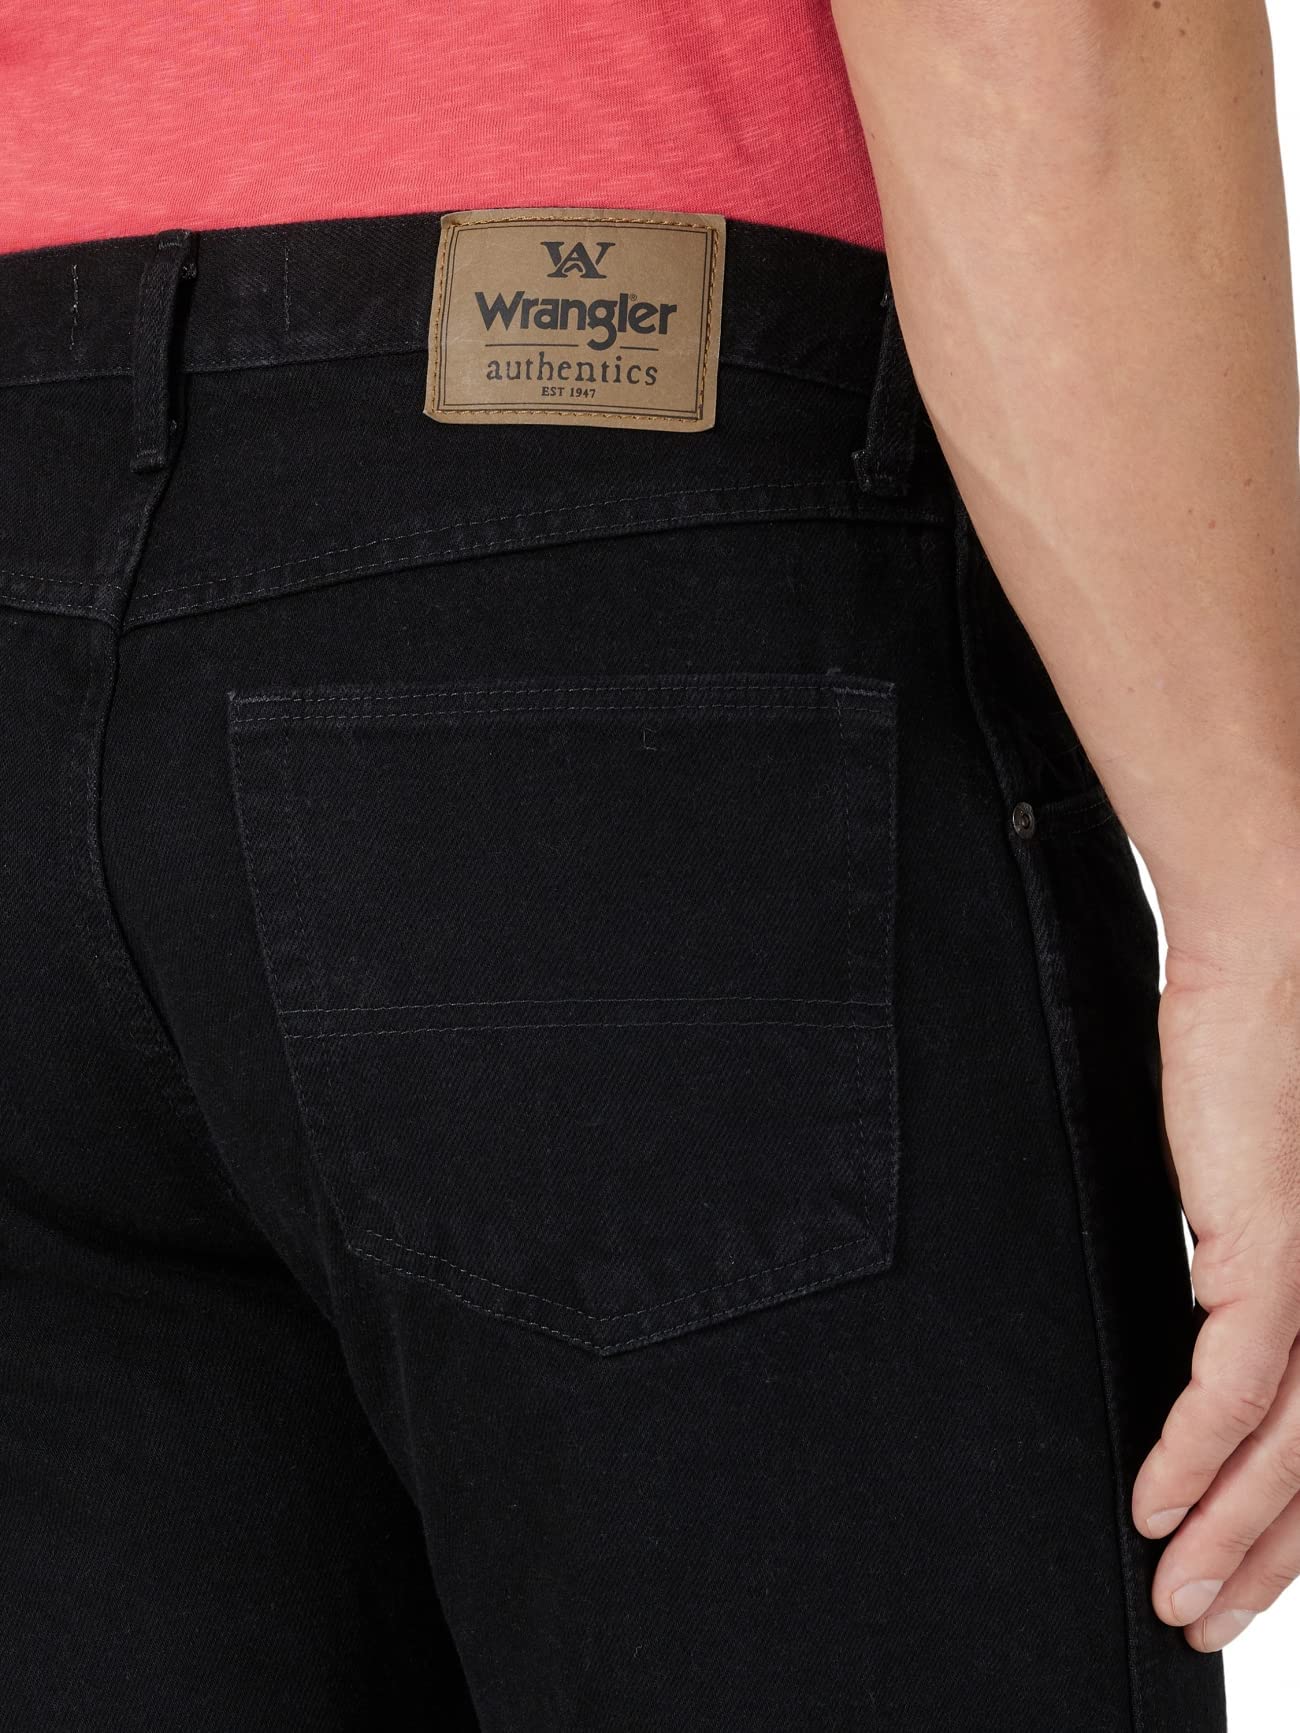 Wrangler Authentics Men's Classic 5-Pocket Regular Fit Cotton Jean, Black, 34W x 32L